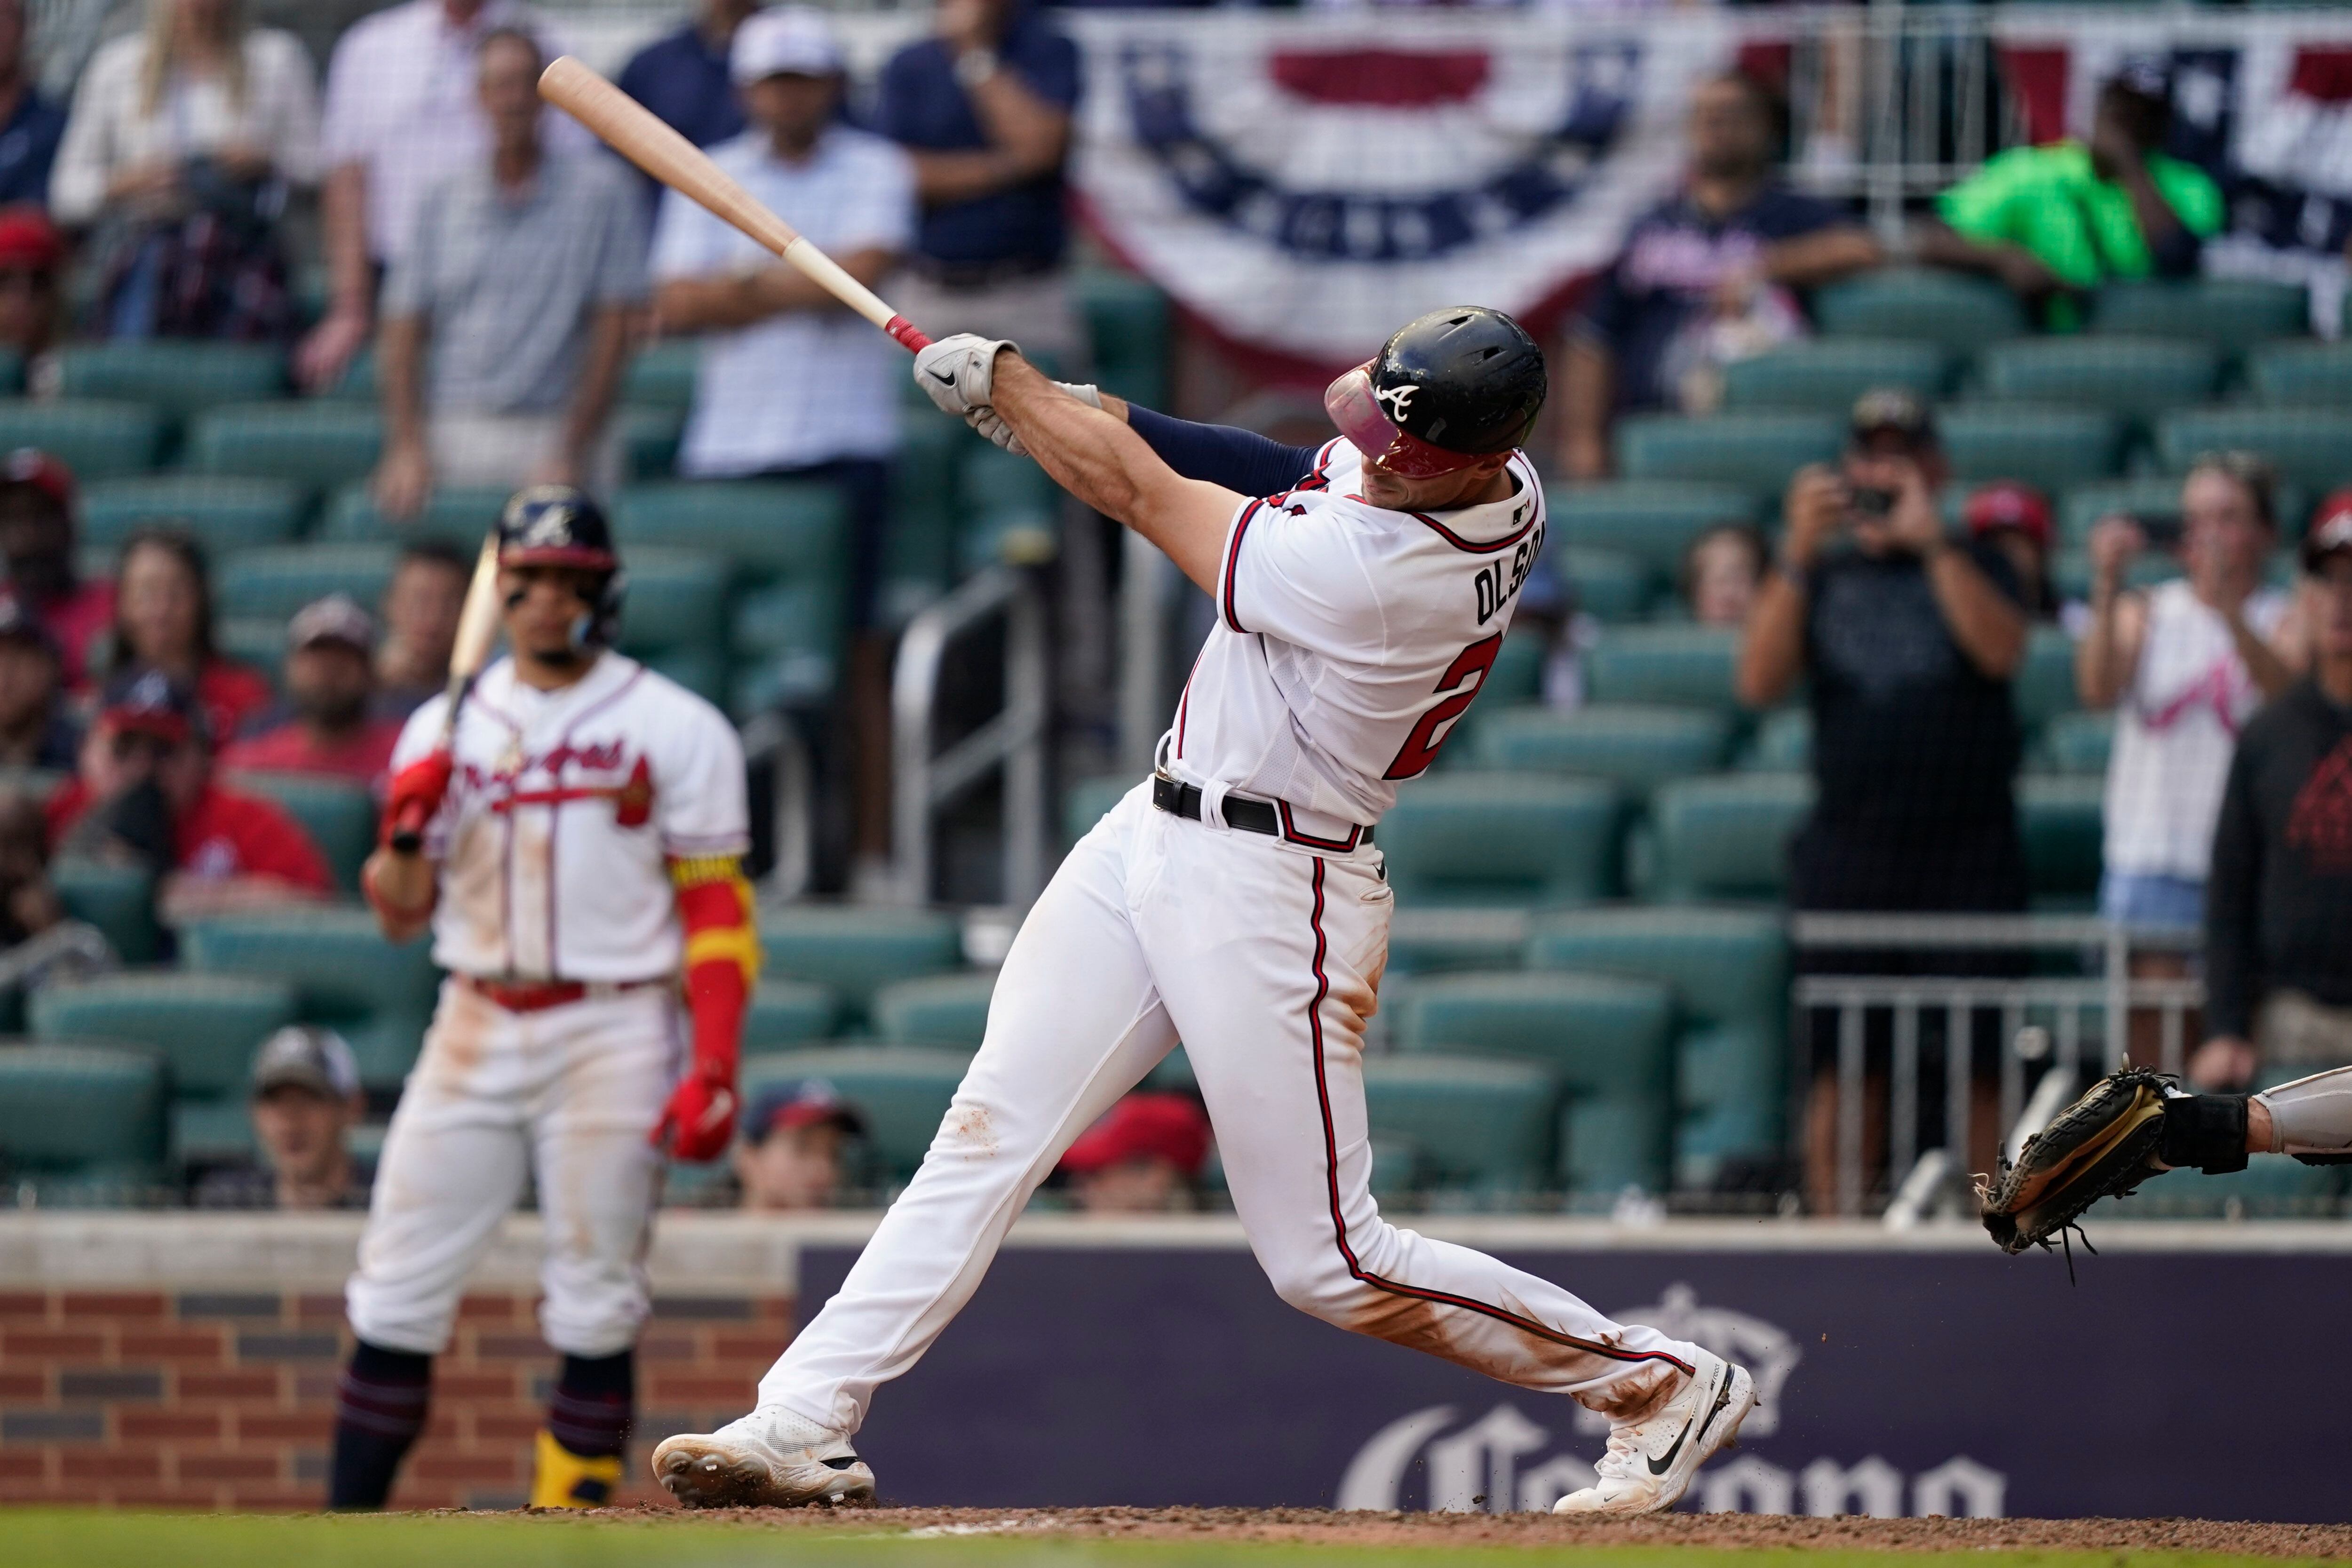 Phillies' Alec Bohm Cuts Himself Slamming Bat in Frustration After